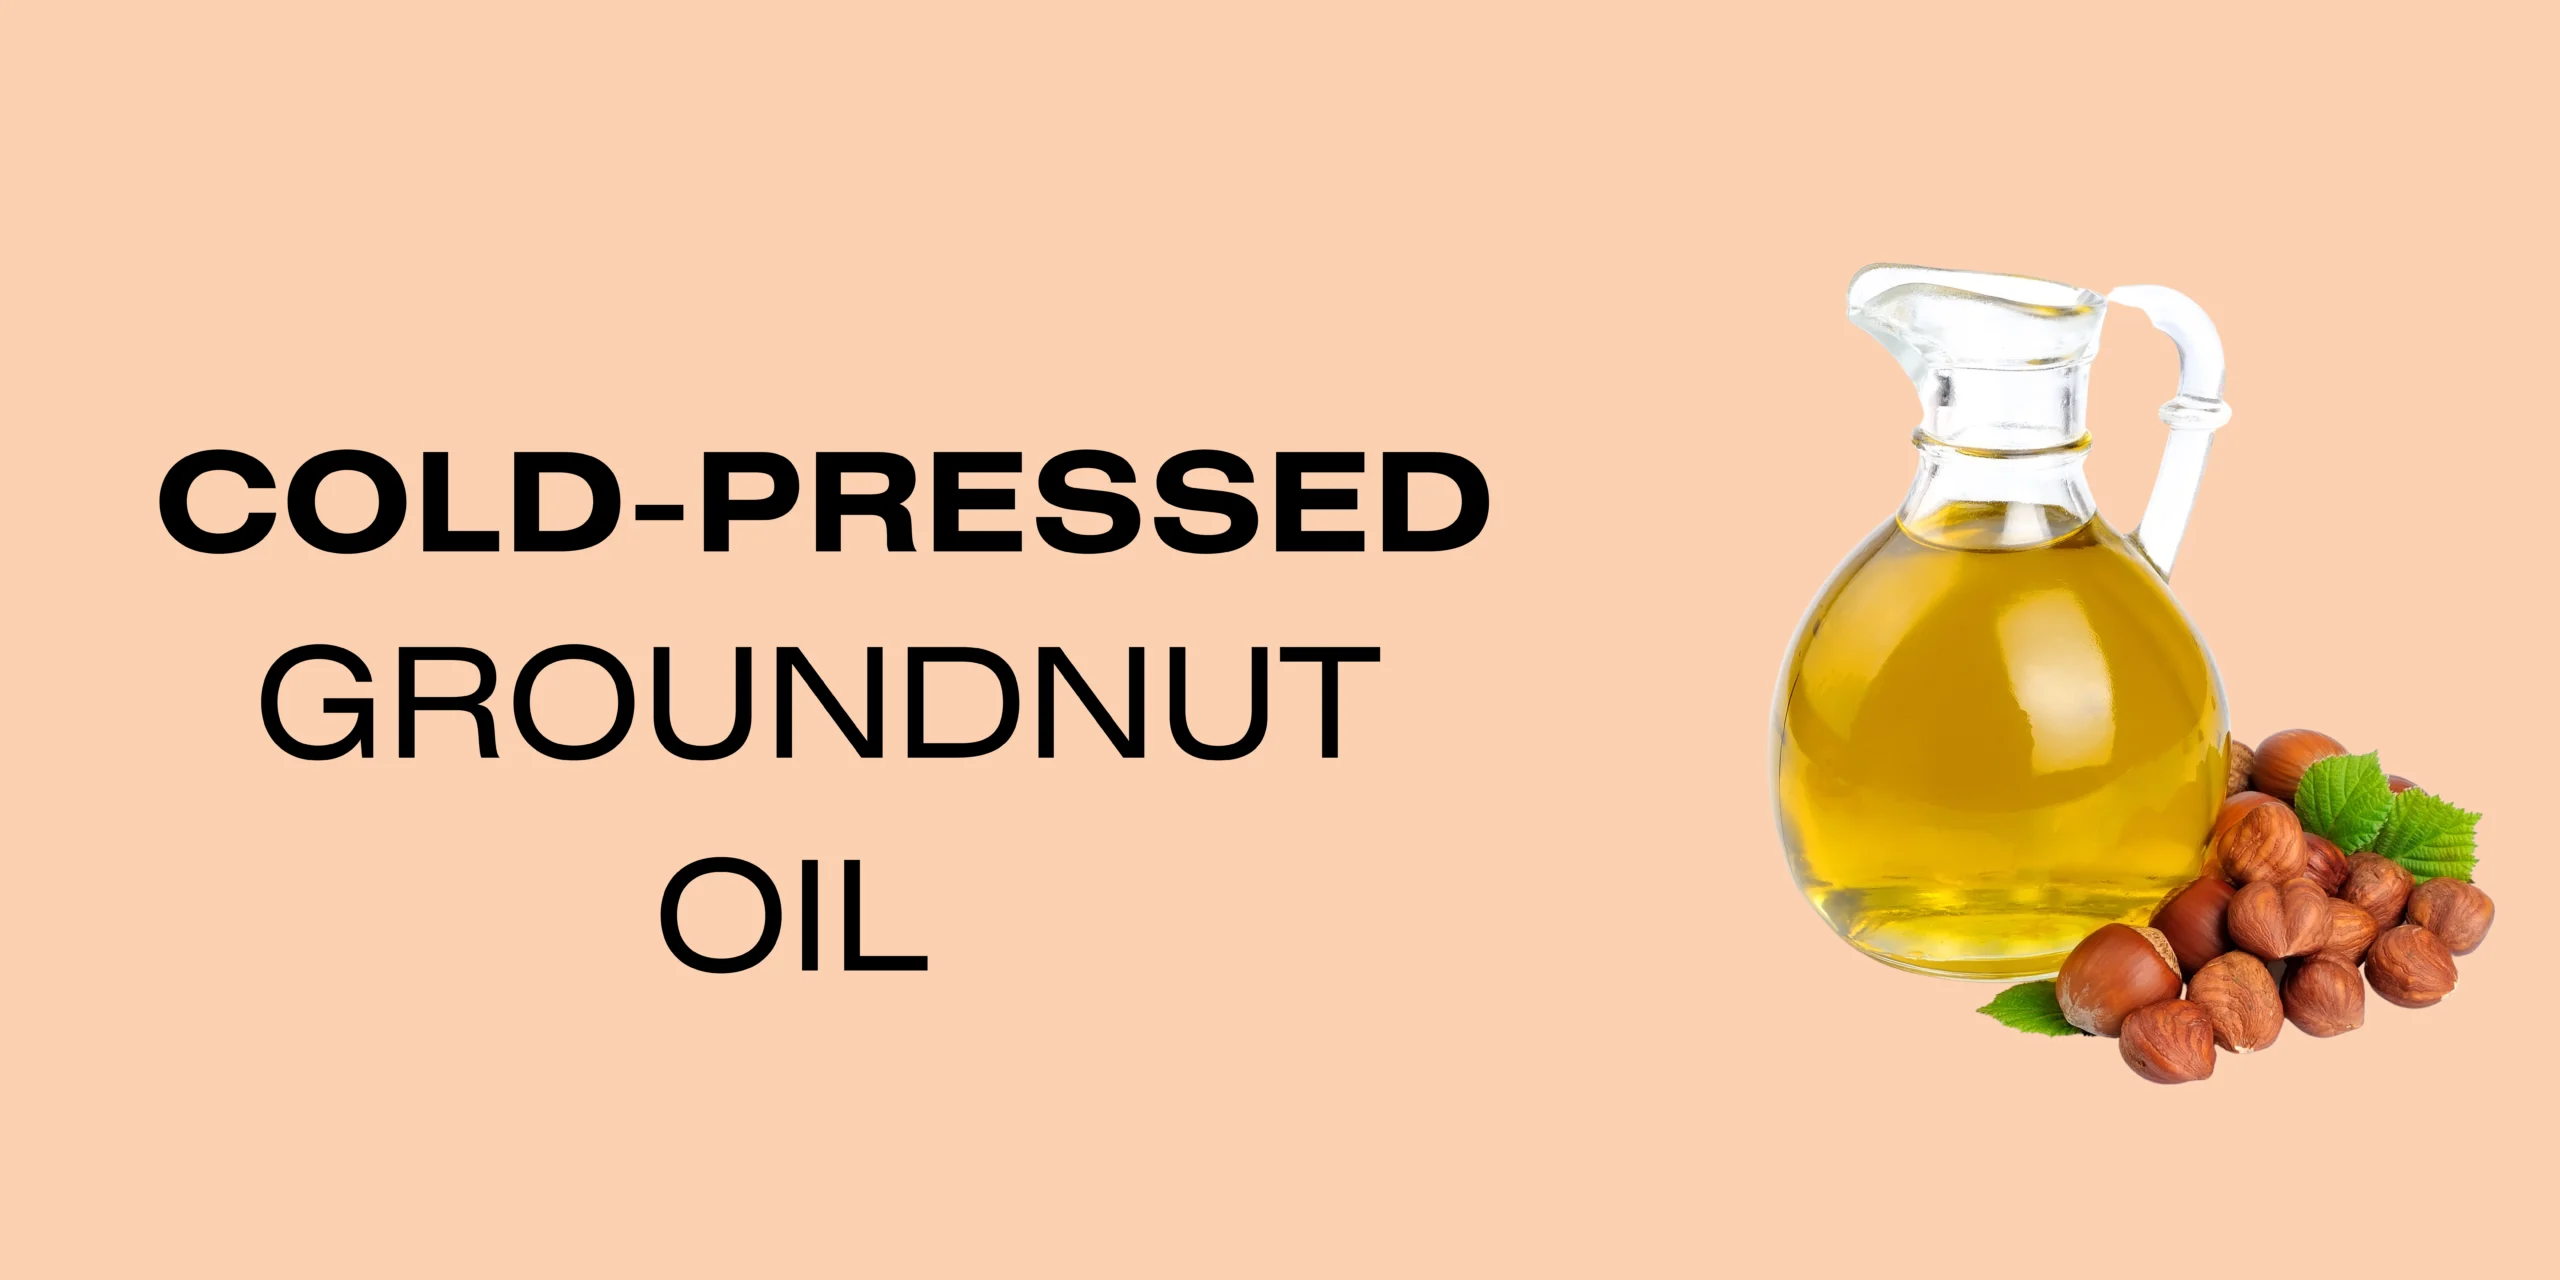 a landscape image of cold pressed groundnut oil